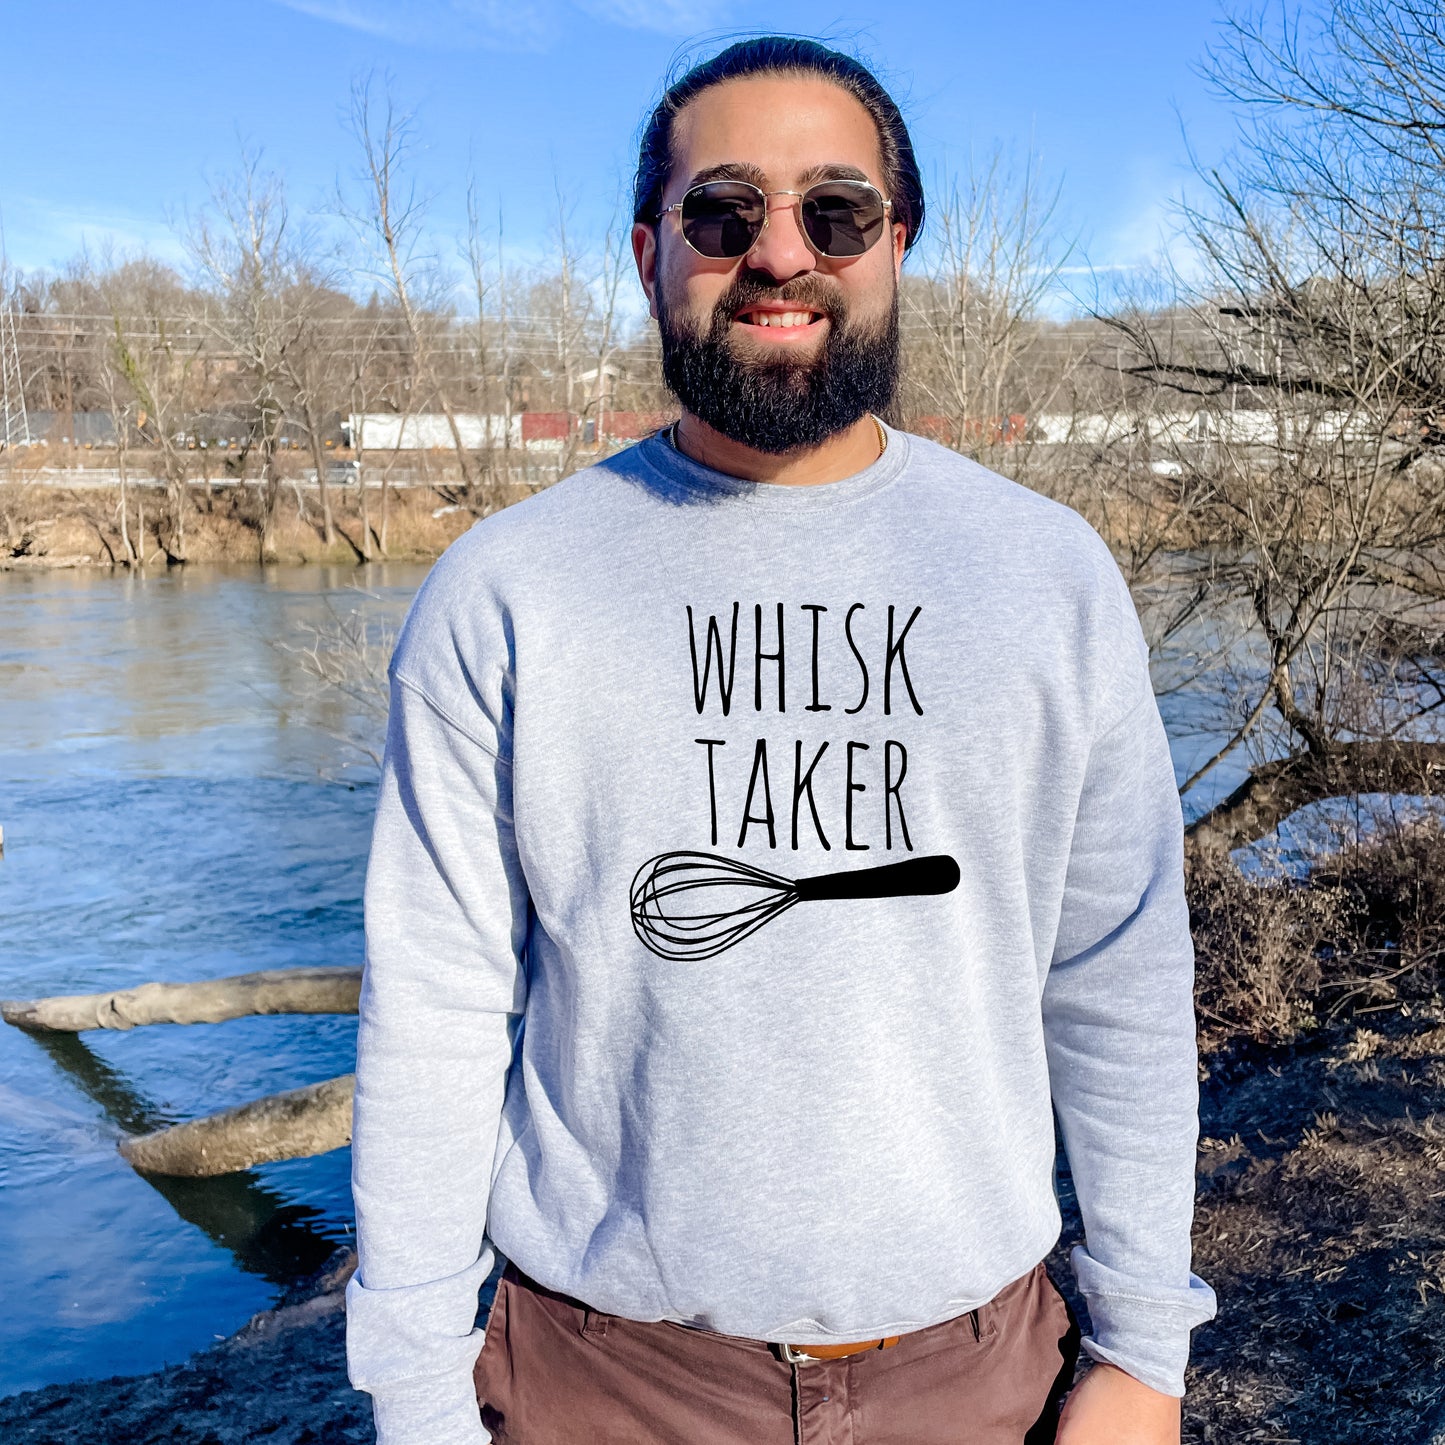 Whisk Taker (Baking) - Unisex Sweatshirt - Heather Gray or Dusty Blue